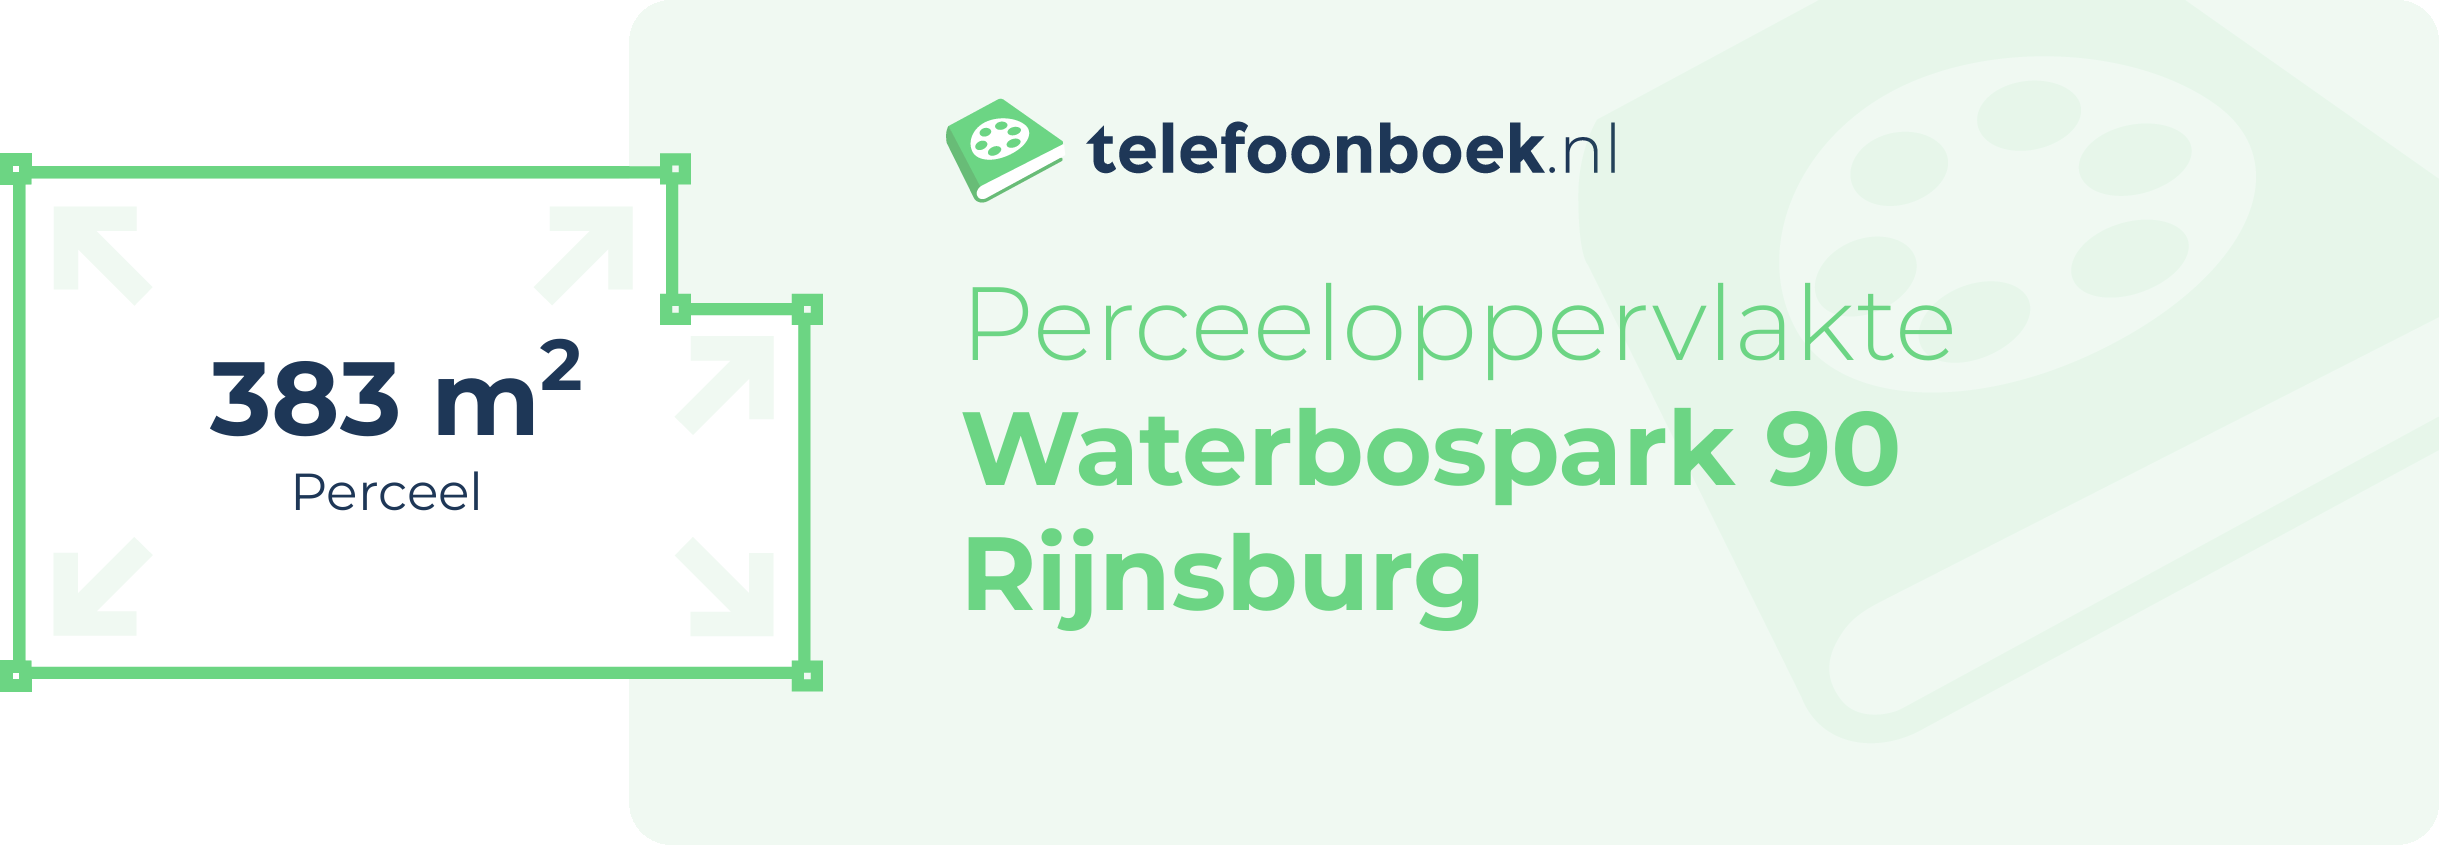 Perceeloppervlakte Waterbospark 90 Rijnsburg